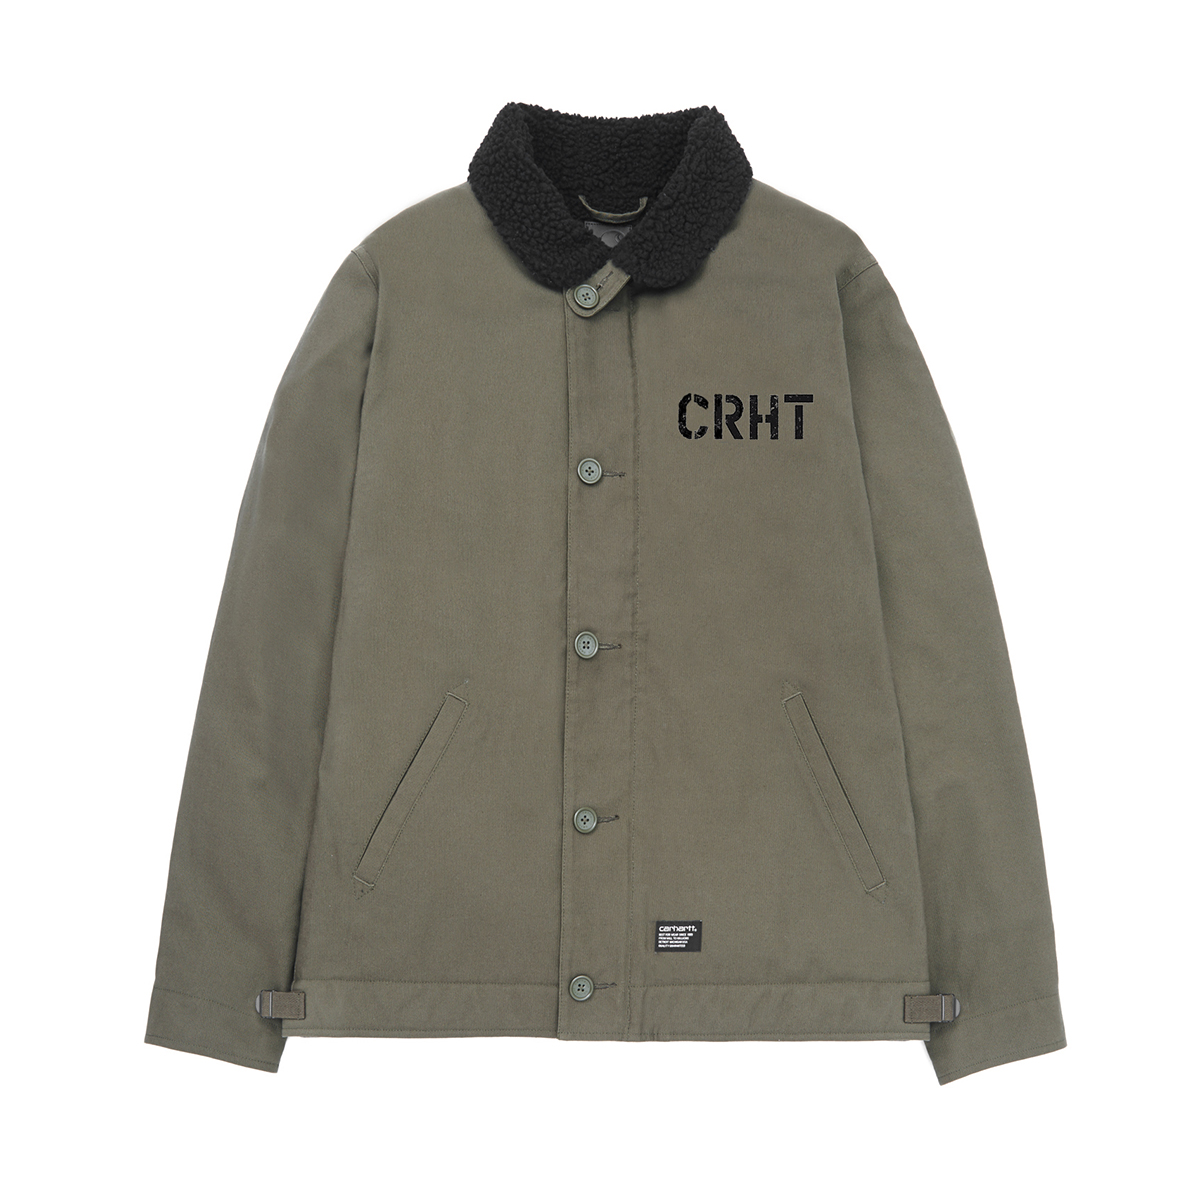 a1520016300_crht-jacket_cypress_black-rinsed